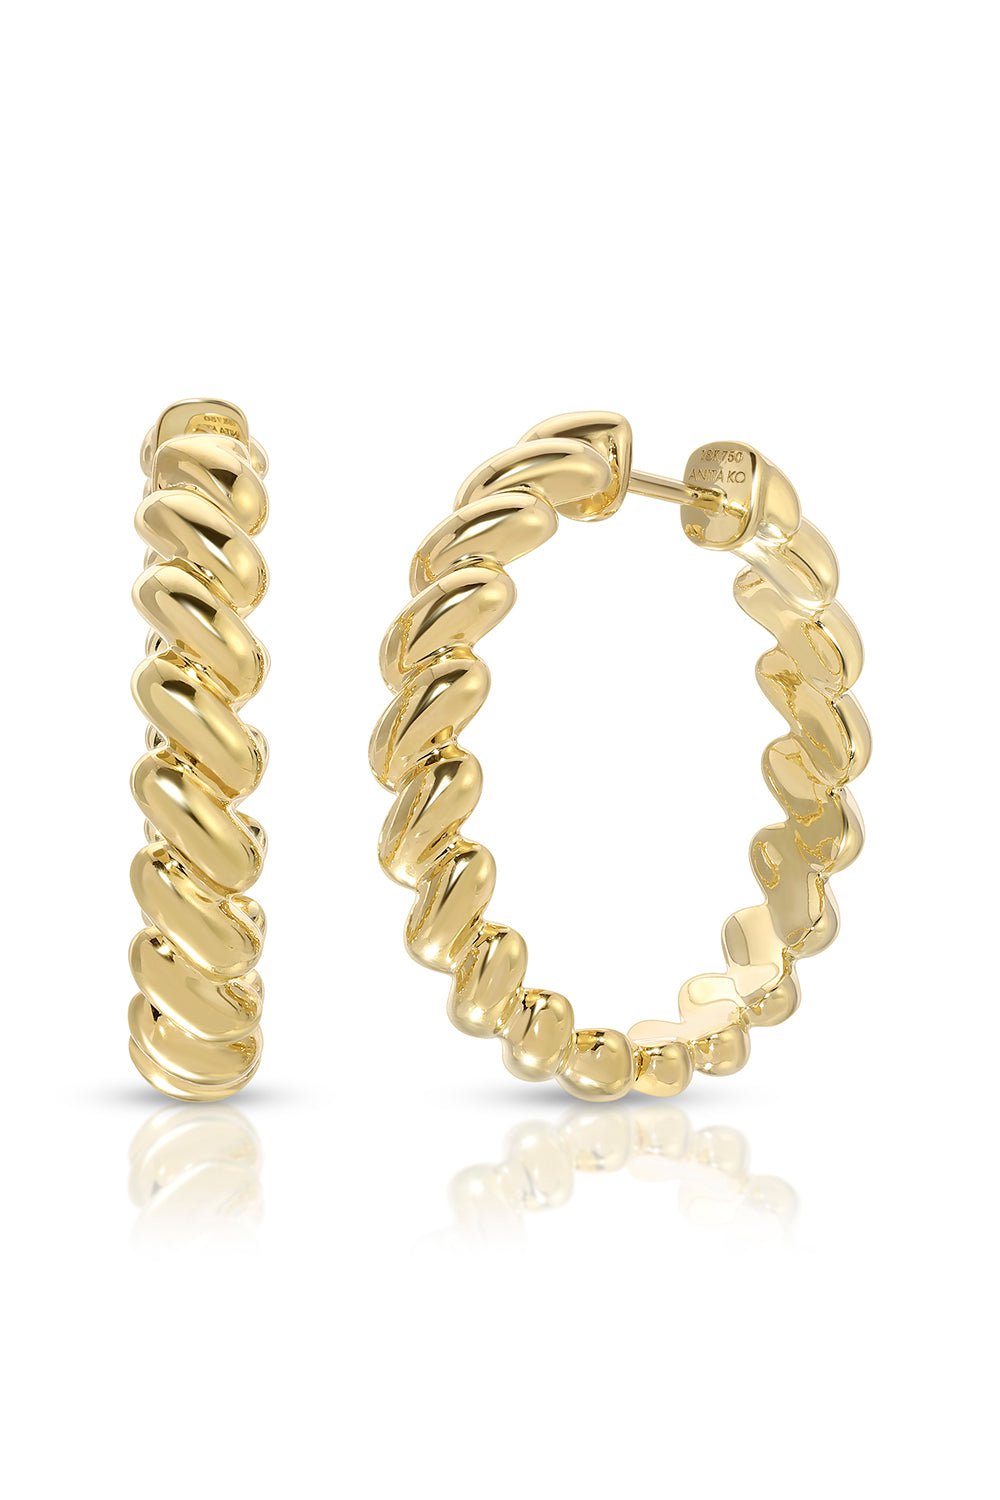 ANITA KO-Coil Hoop Earrings-YELLOW GOLD